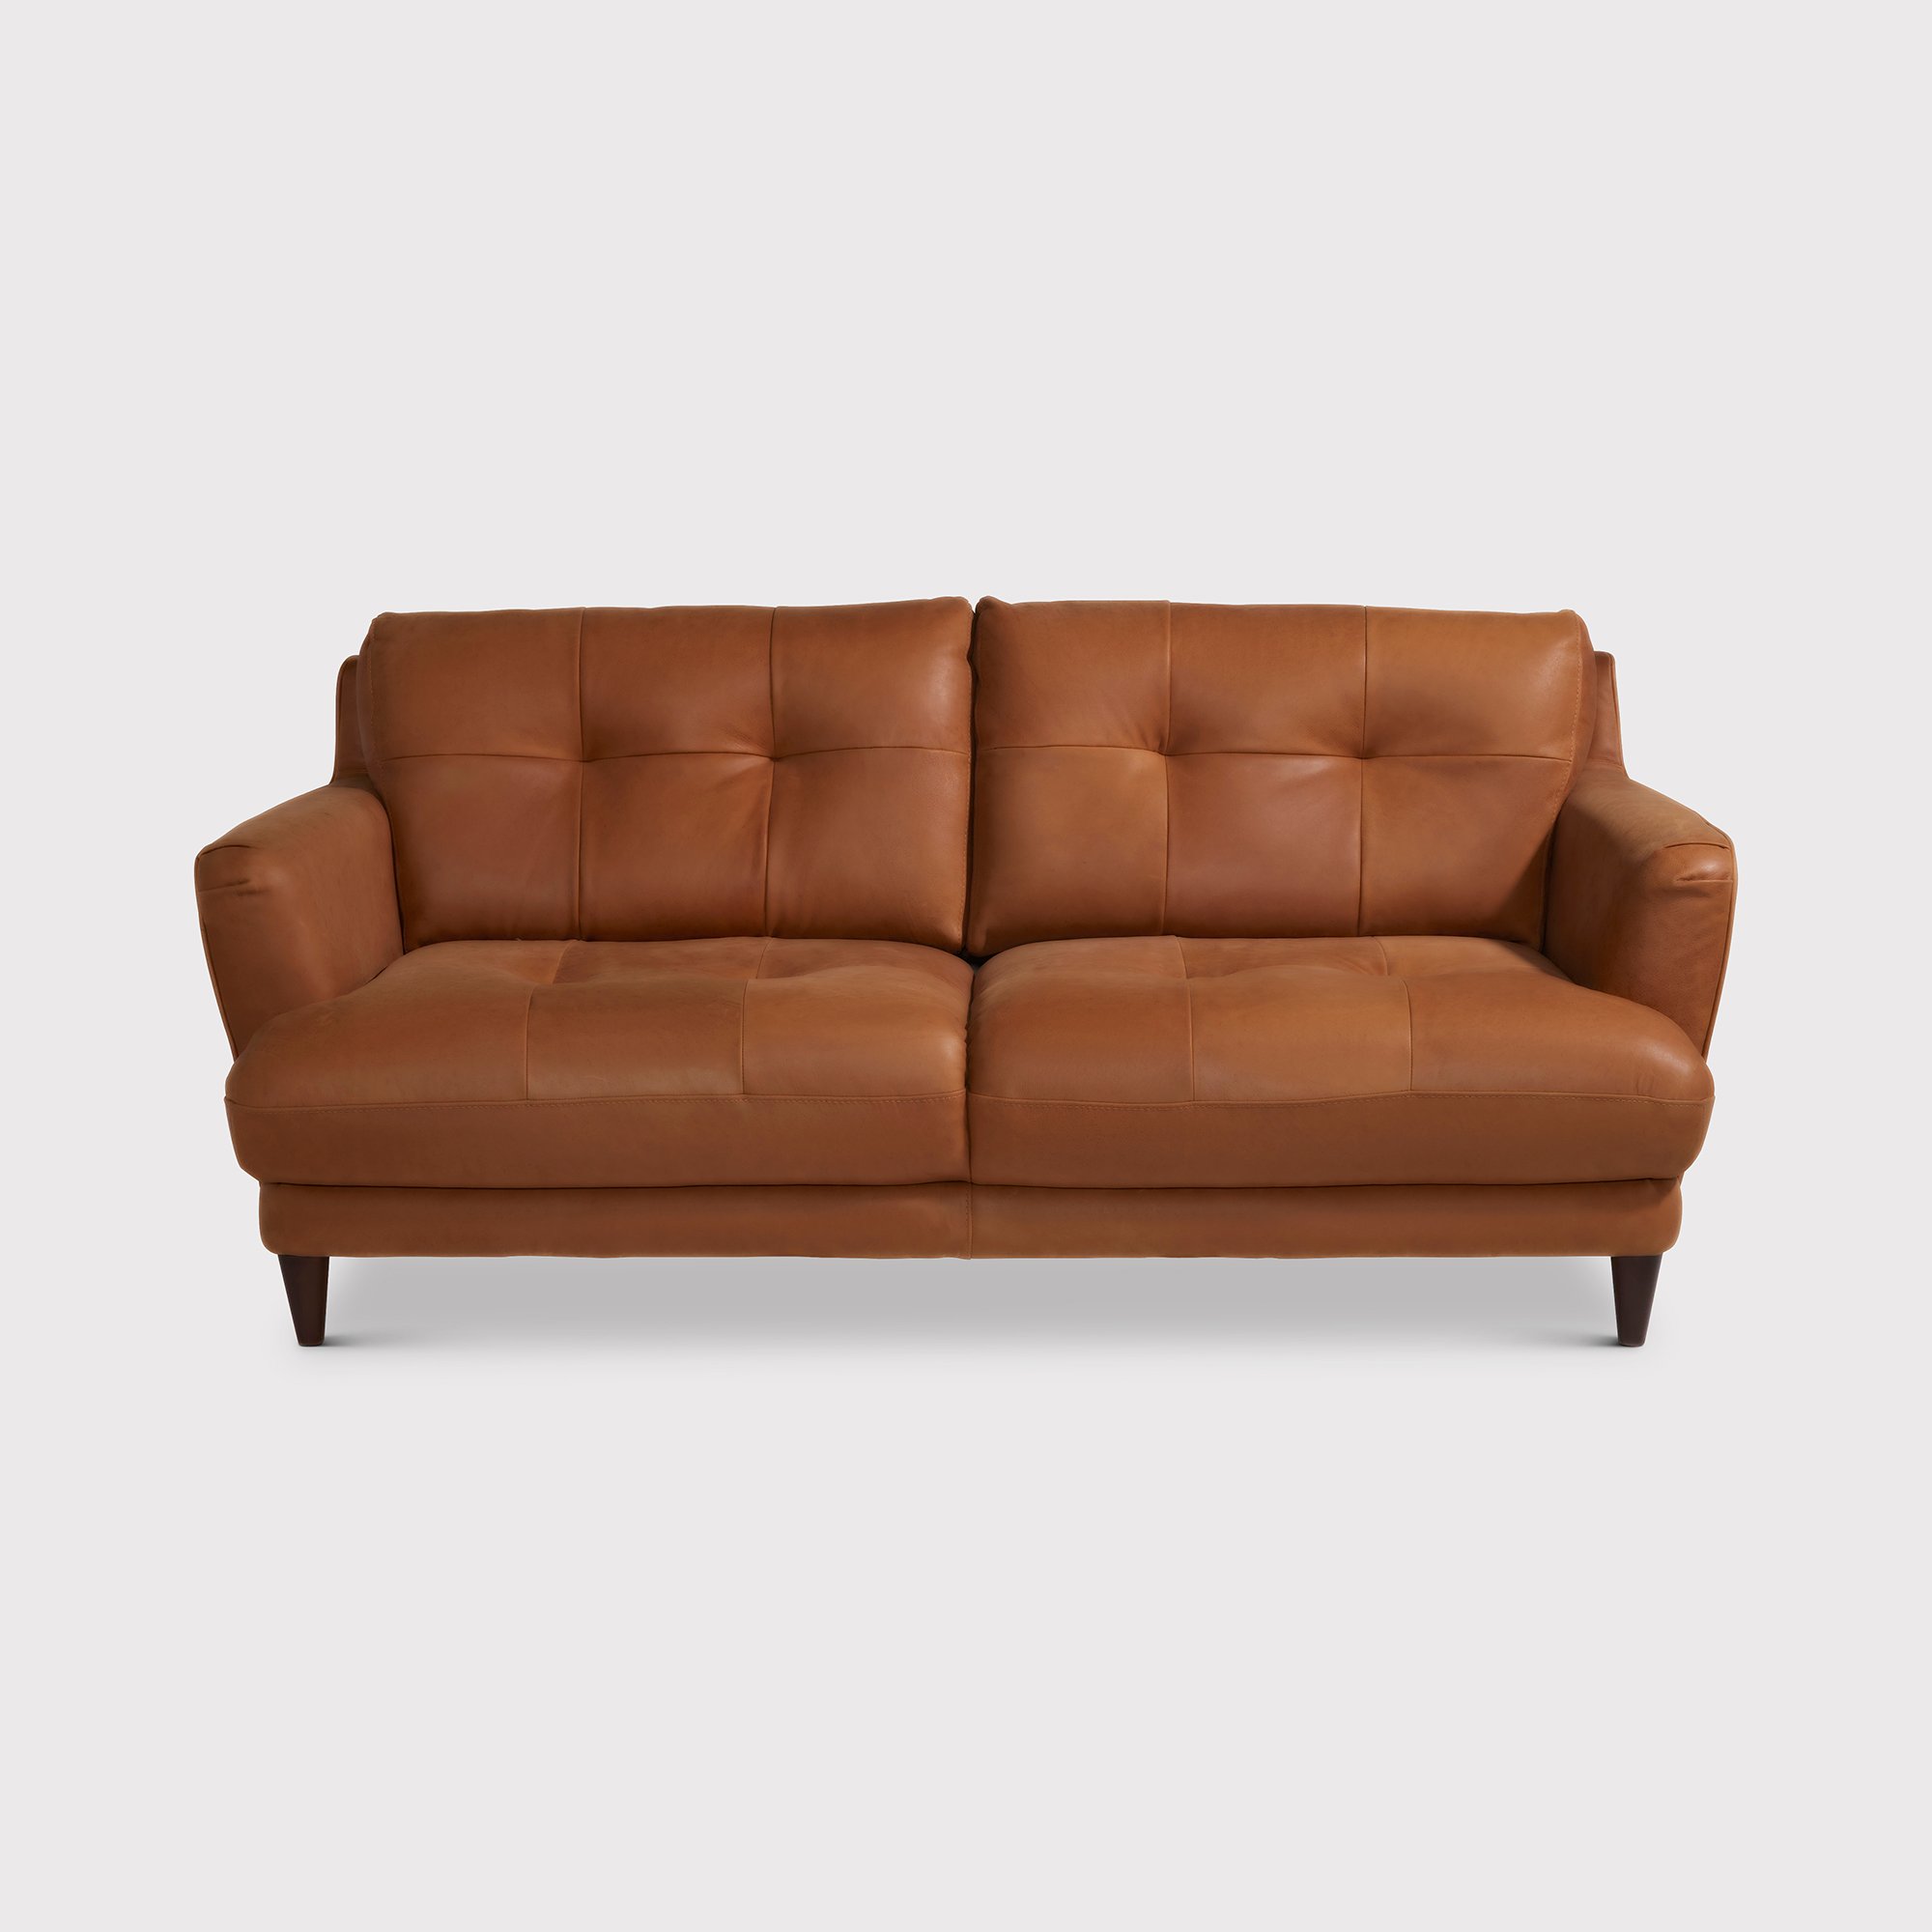 Aldo Loveseat Sofa, Brown Leather | Barker & Stonehouse